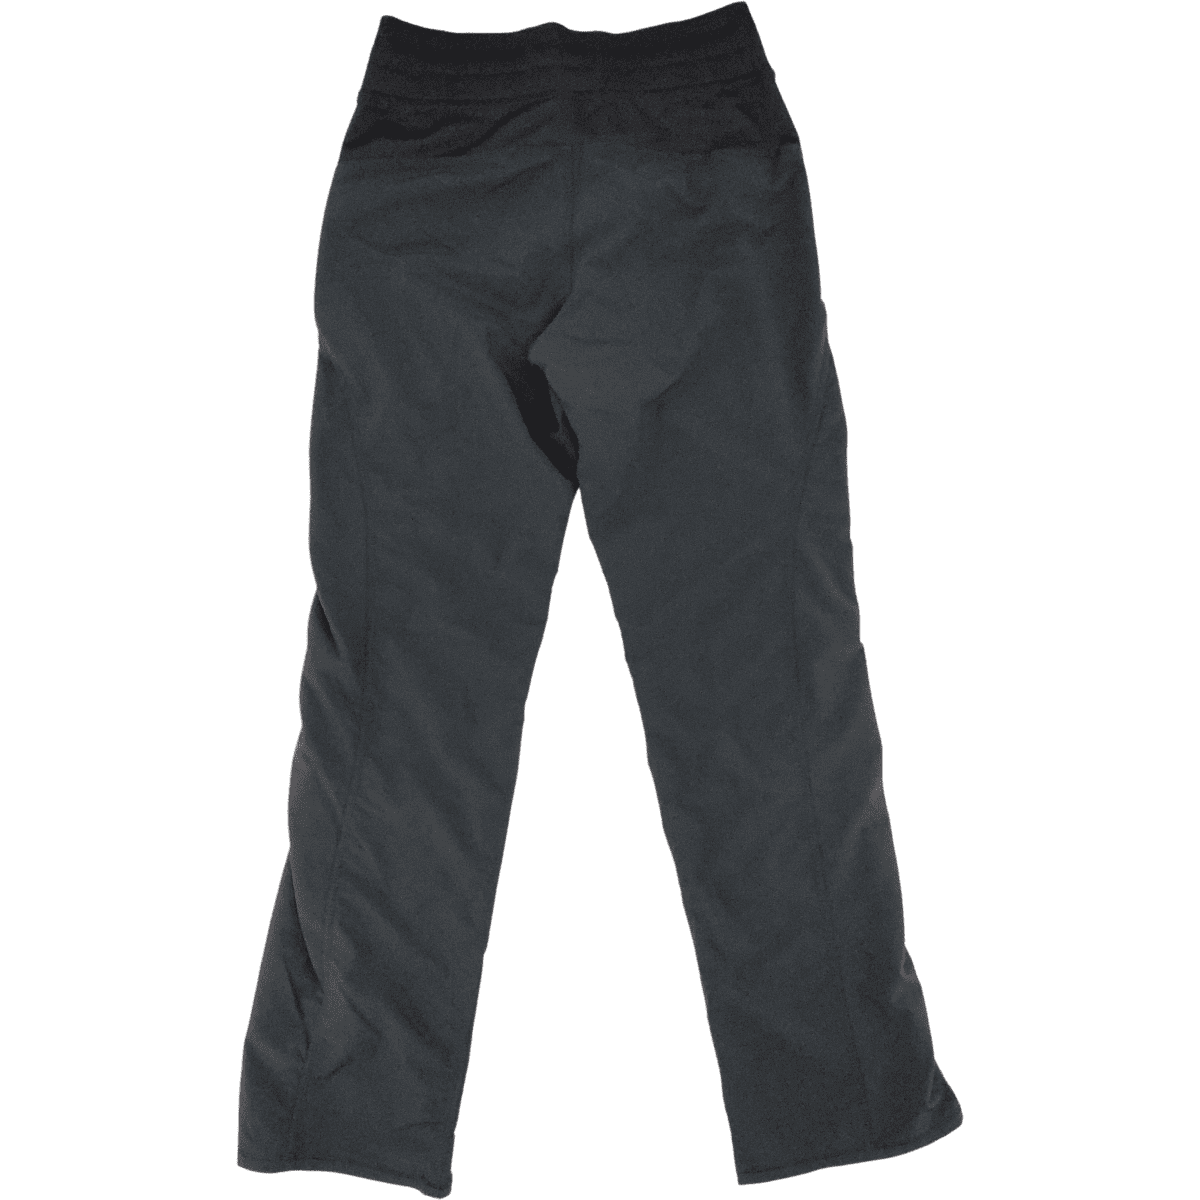 Kirkland Signature - Women's Activewear -Yoga Pants for Women - Workout  Pants Capri